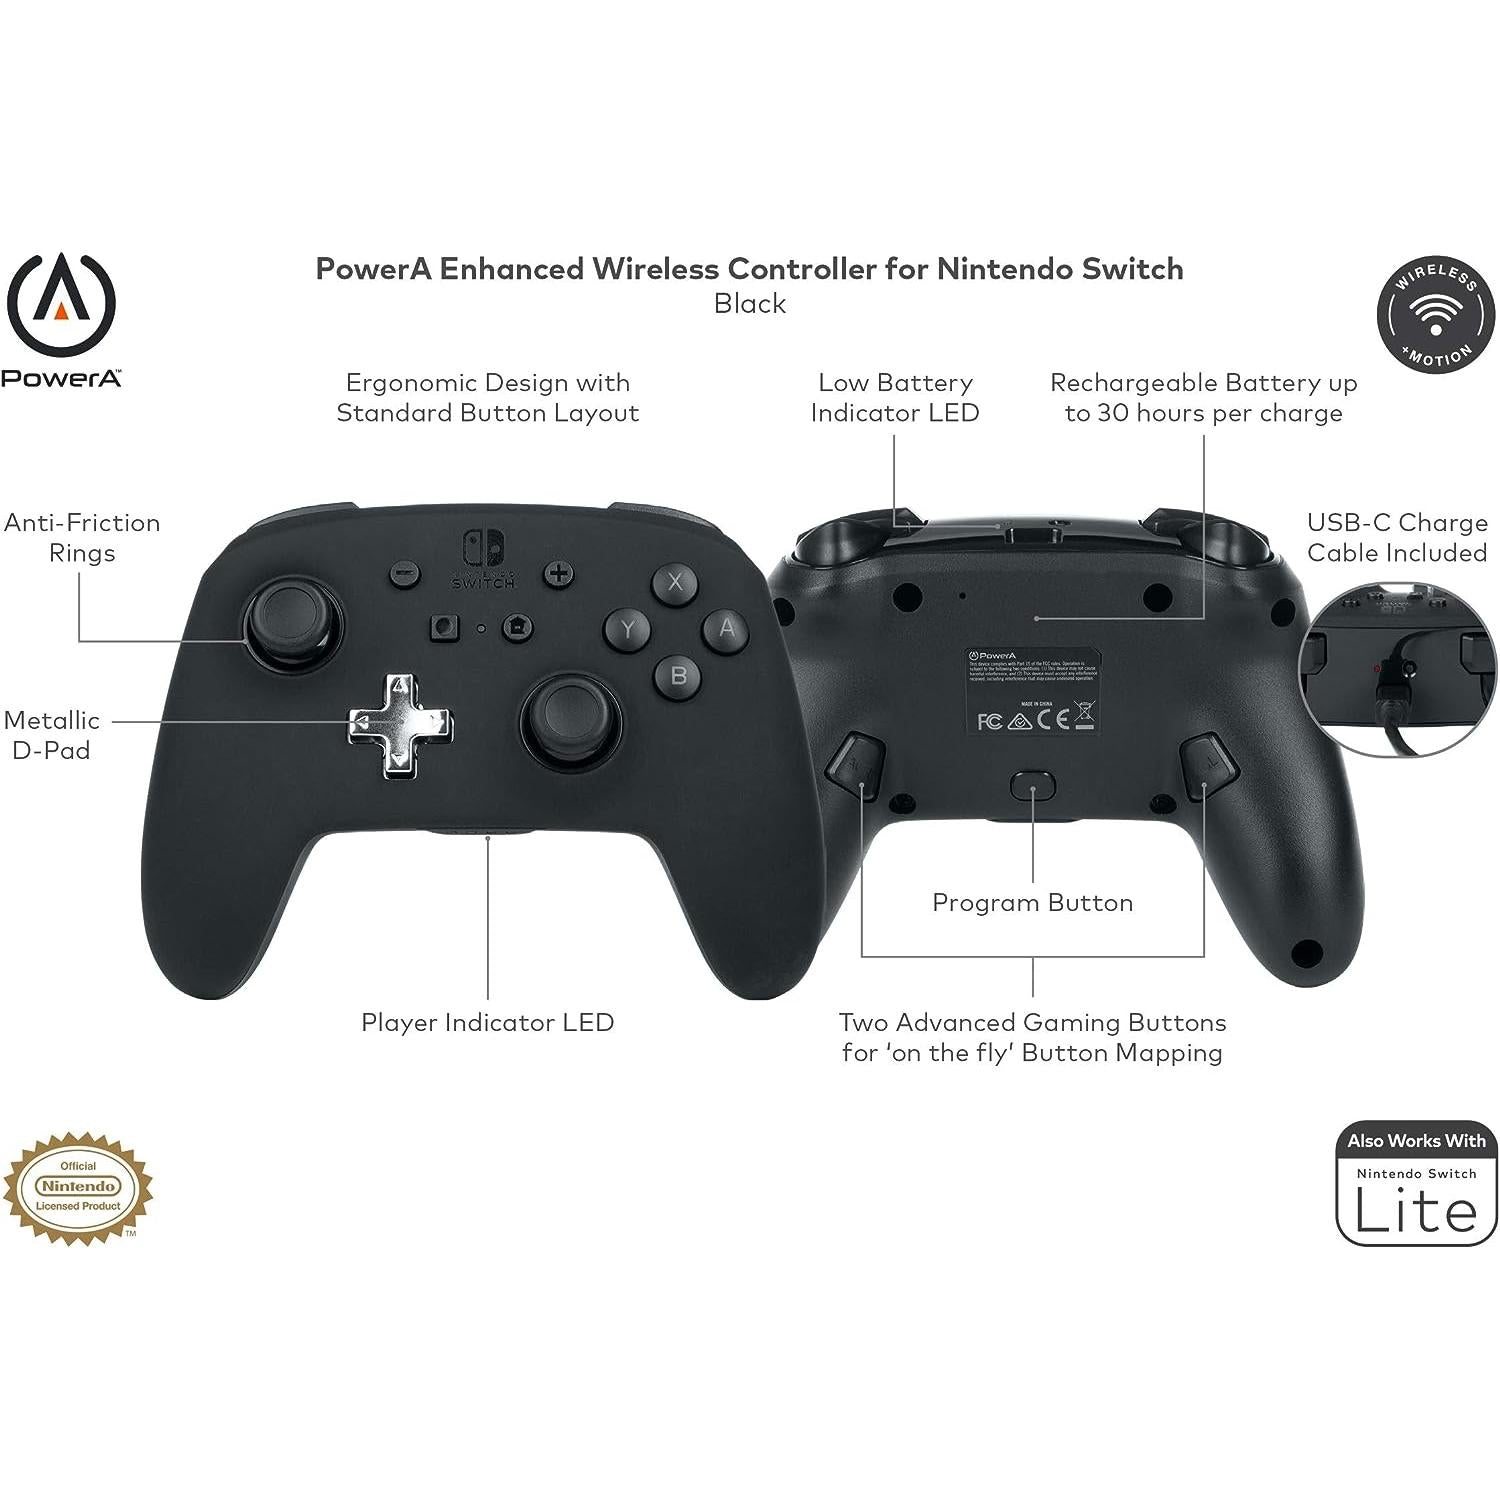 Nintendo Switch Enhanced Wirless Controller by PowerA